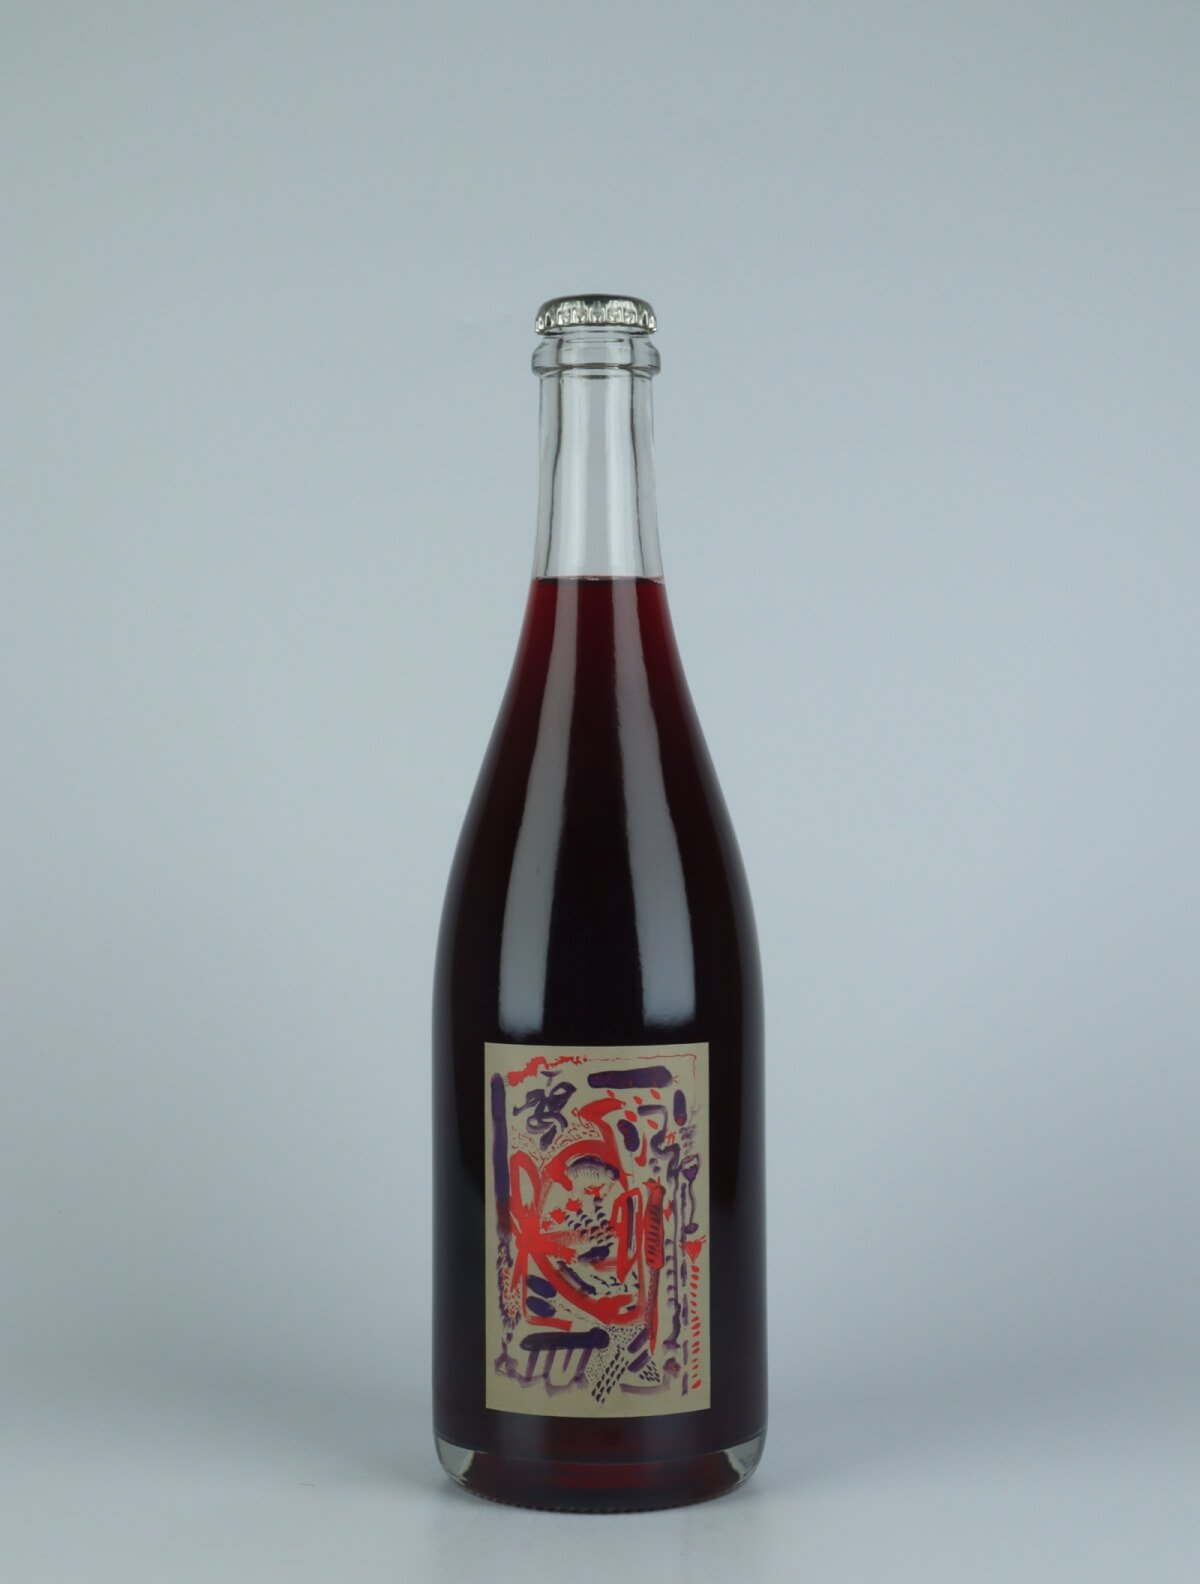 A bottle 2021 Curcubeu Red wine from Absurde Génie des Fleurs, Languedoc in France